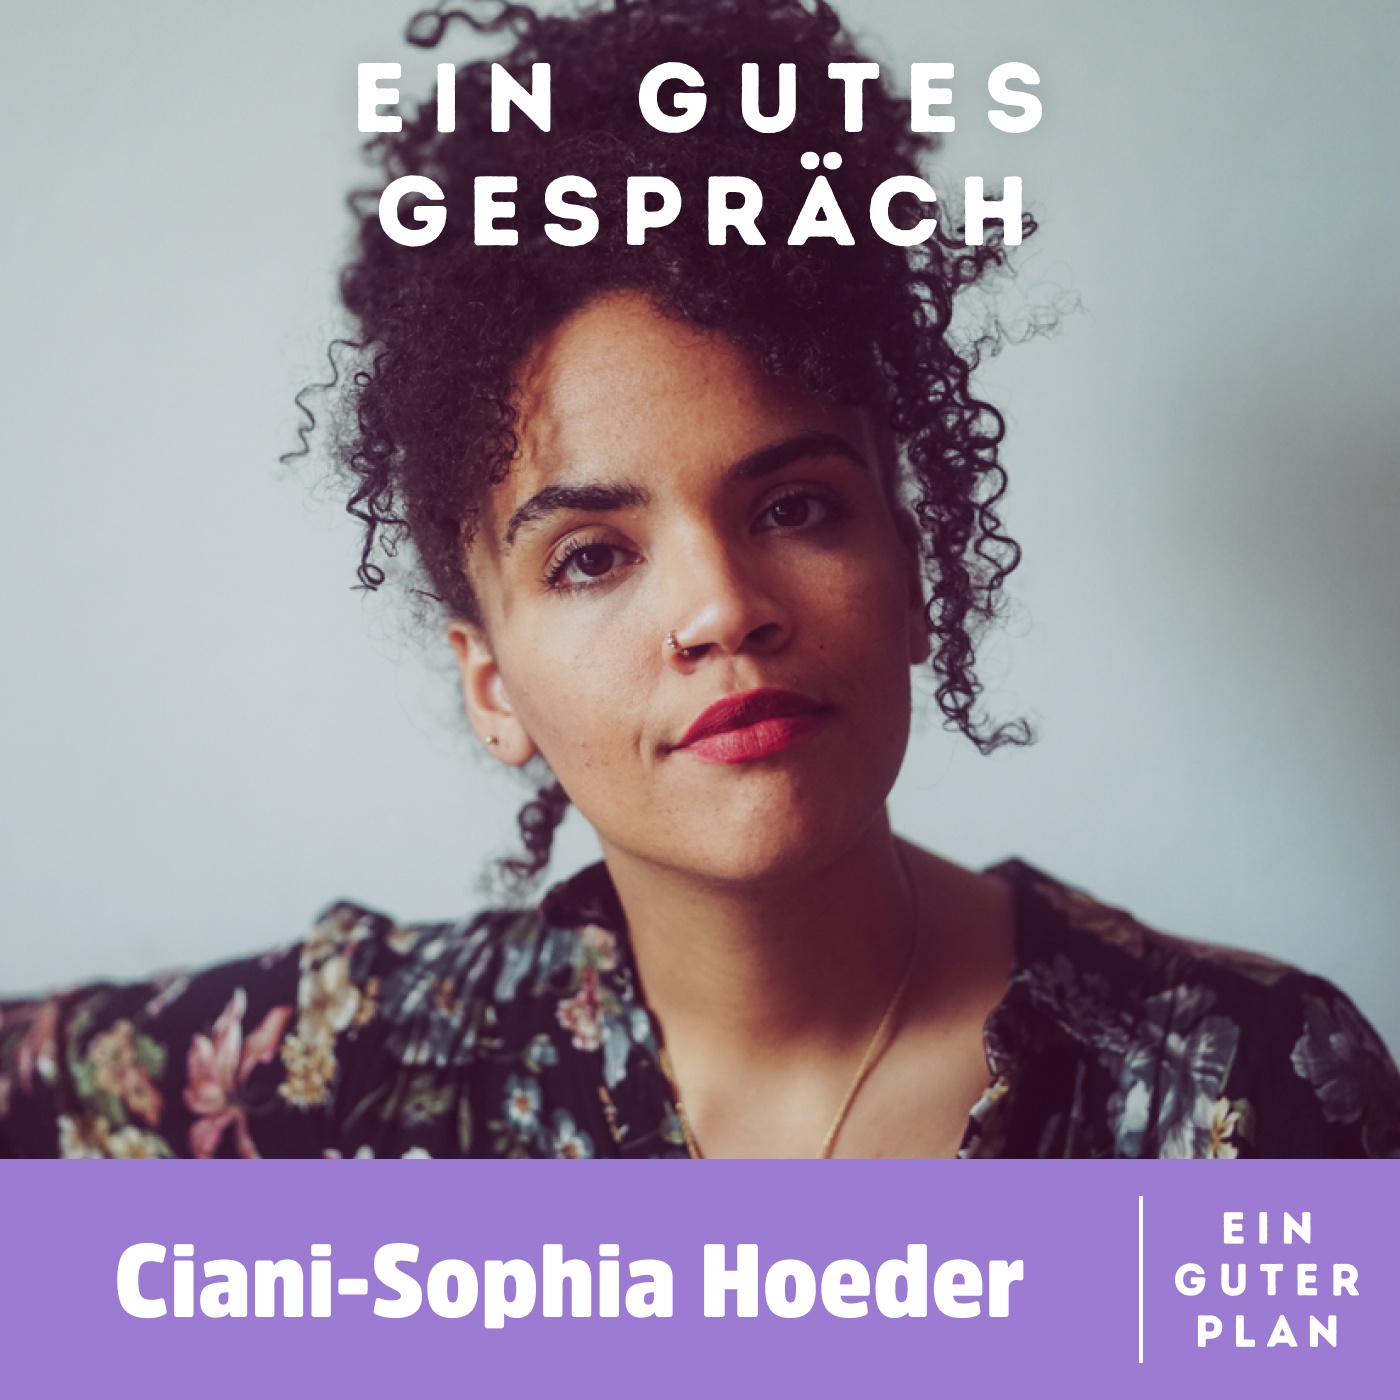 Ciani-Sophia Hoeder, was bringt uns die Wut?